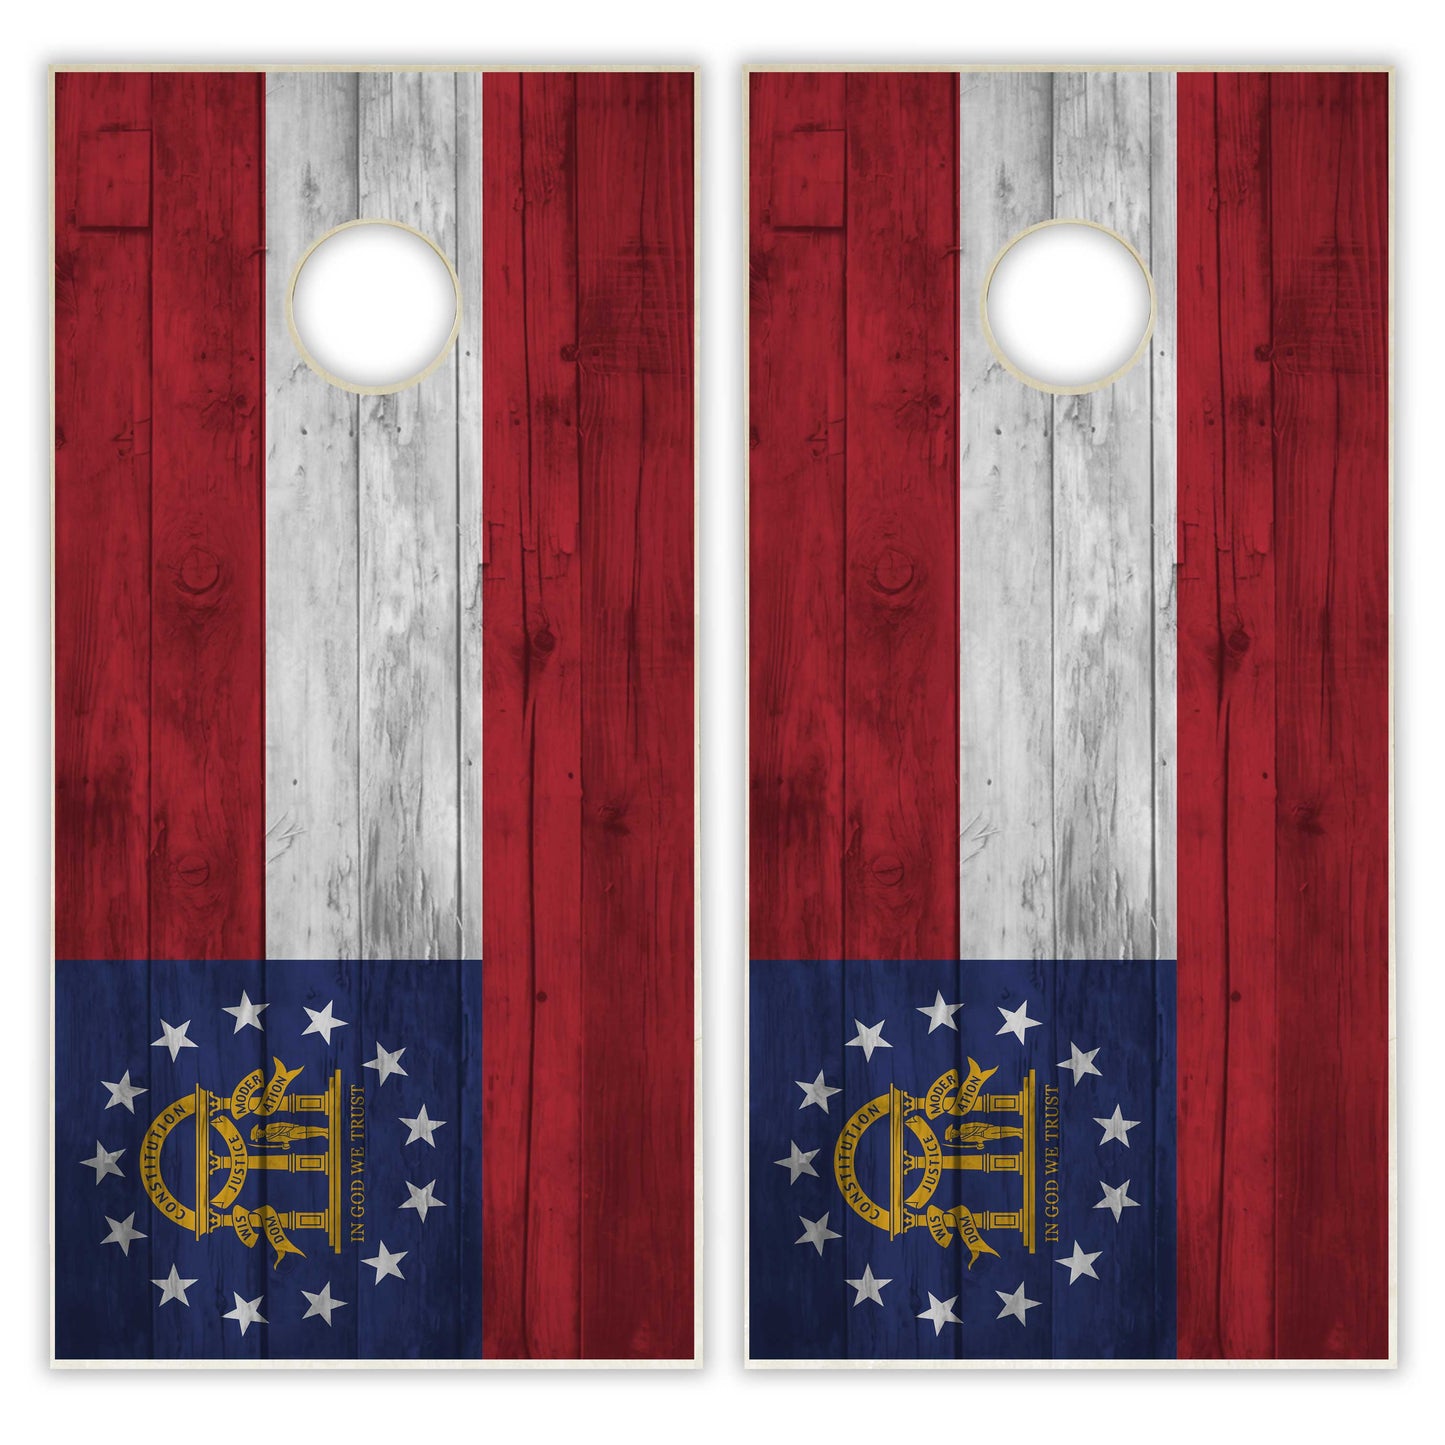 Georgia State Flag Cornhole Set - Distressed Wood